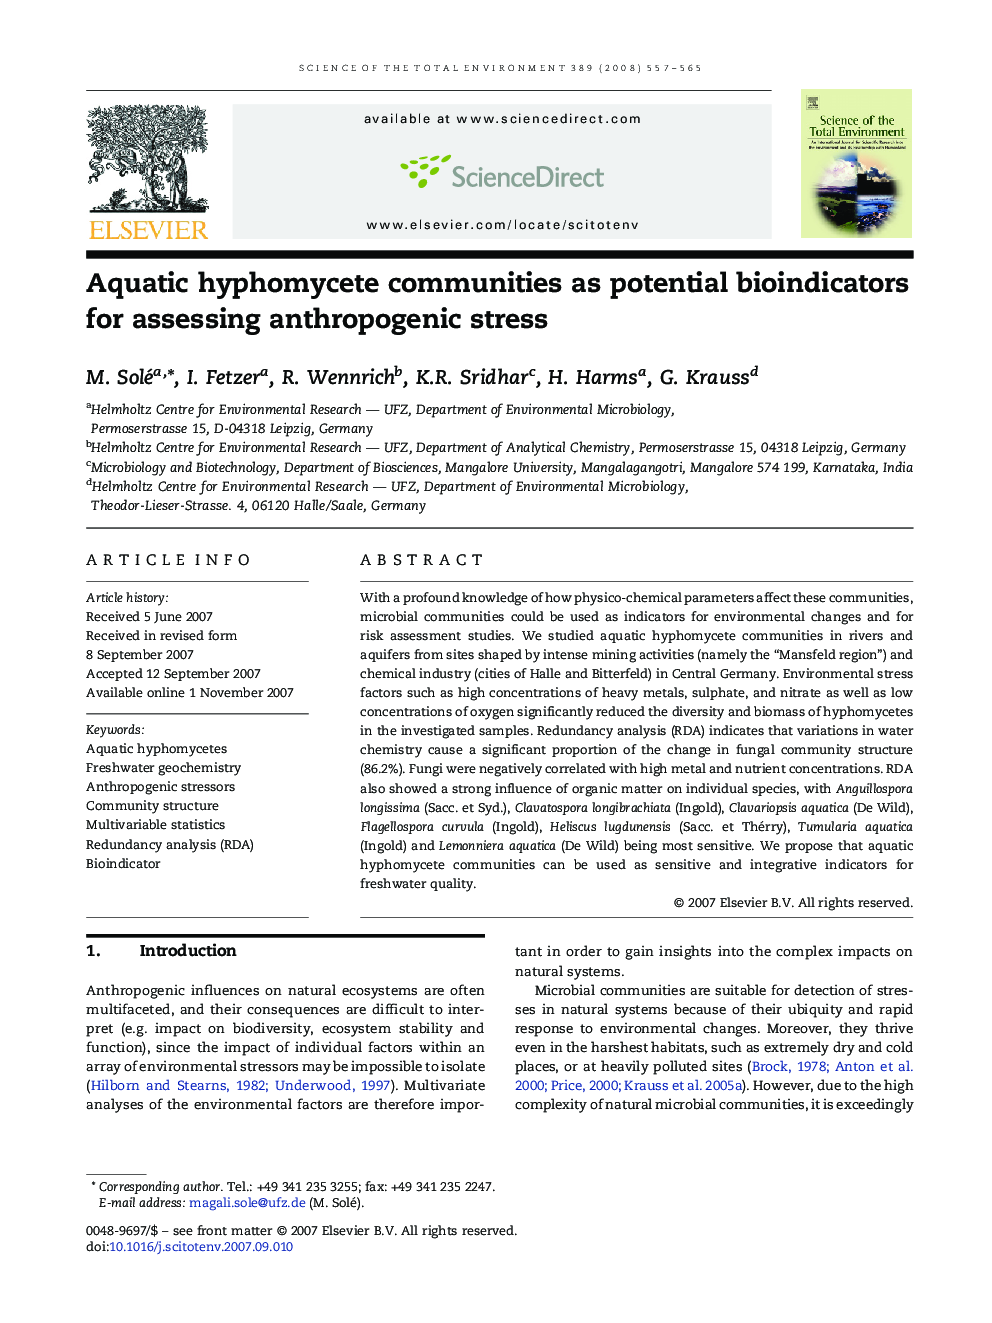 Aquatic hyphomycete communities as potential bioindicators for assessing anthropogenic stress